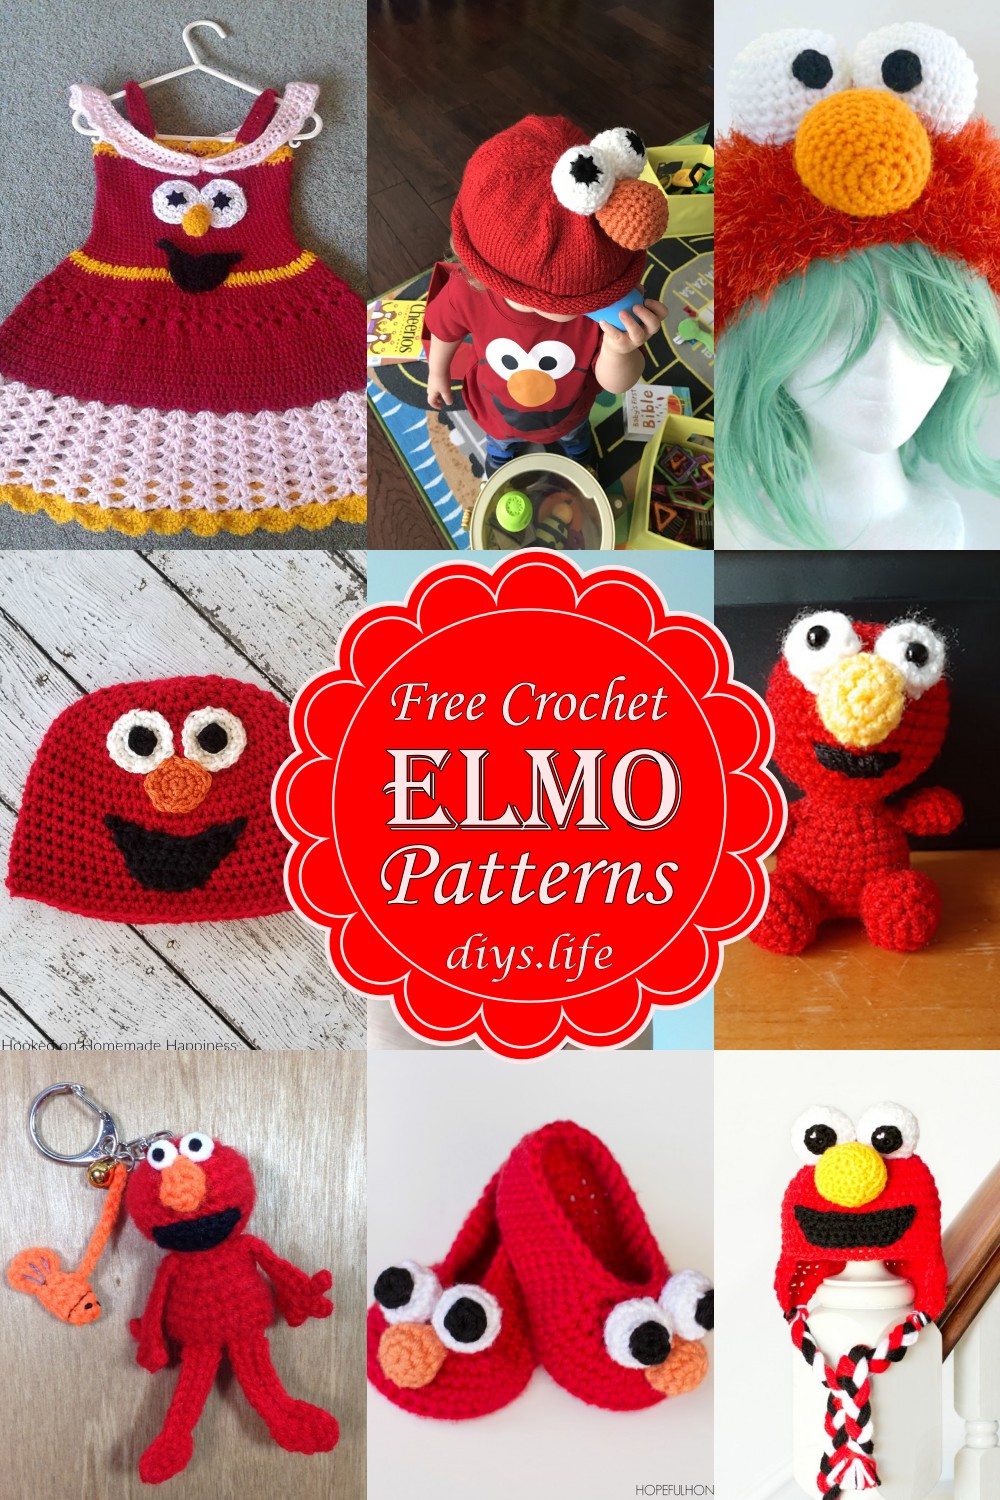  Free And Fun Crochet Elmo Patterns